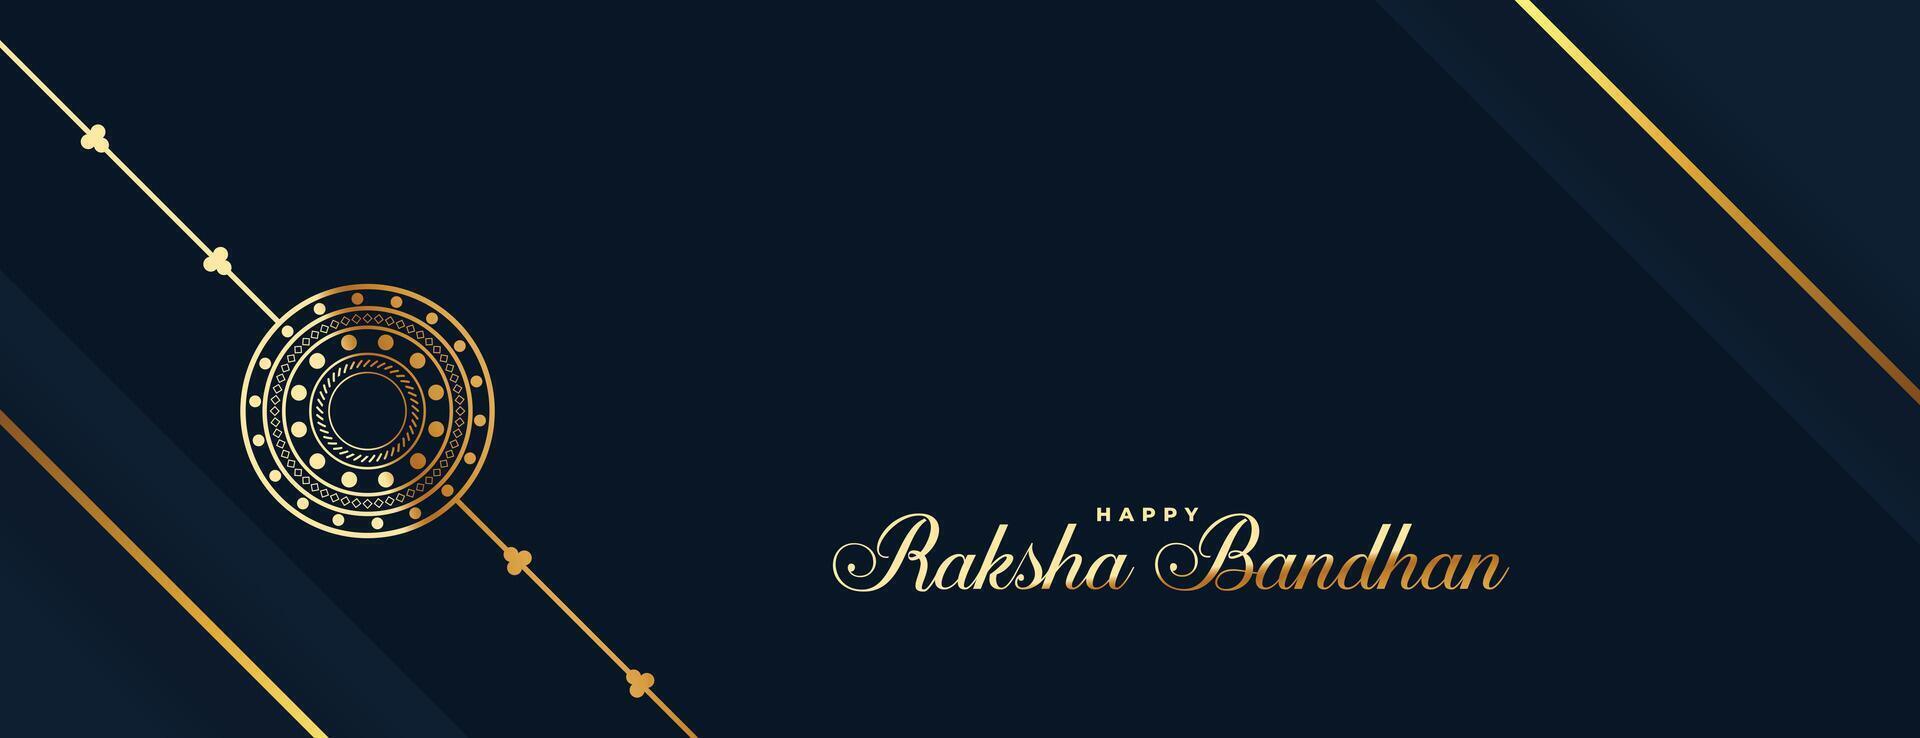 gelukkig raksha bandhan gouden rakhi festival banier vector